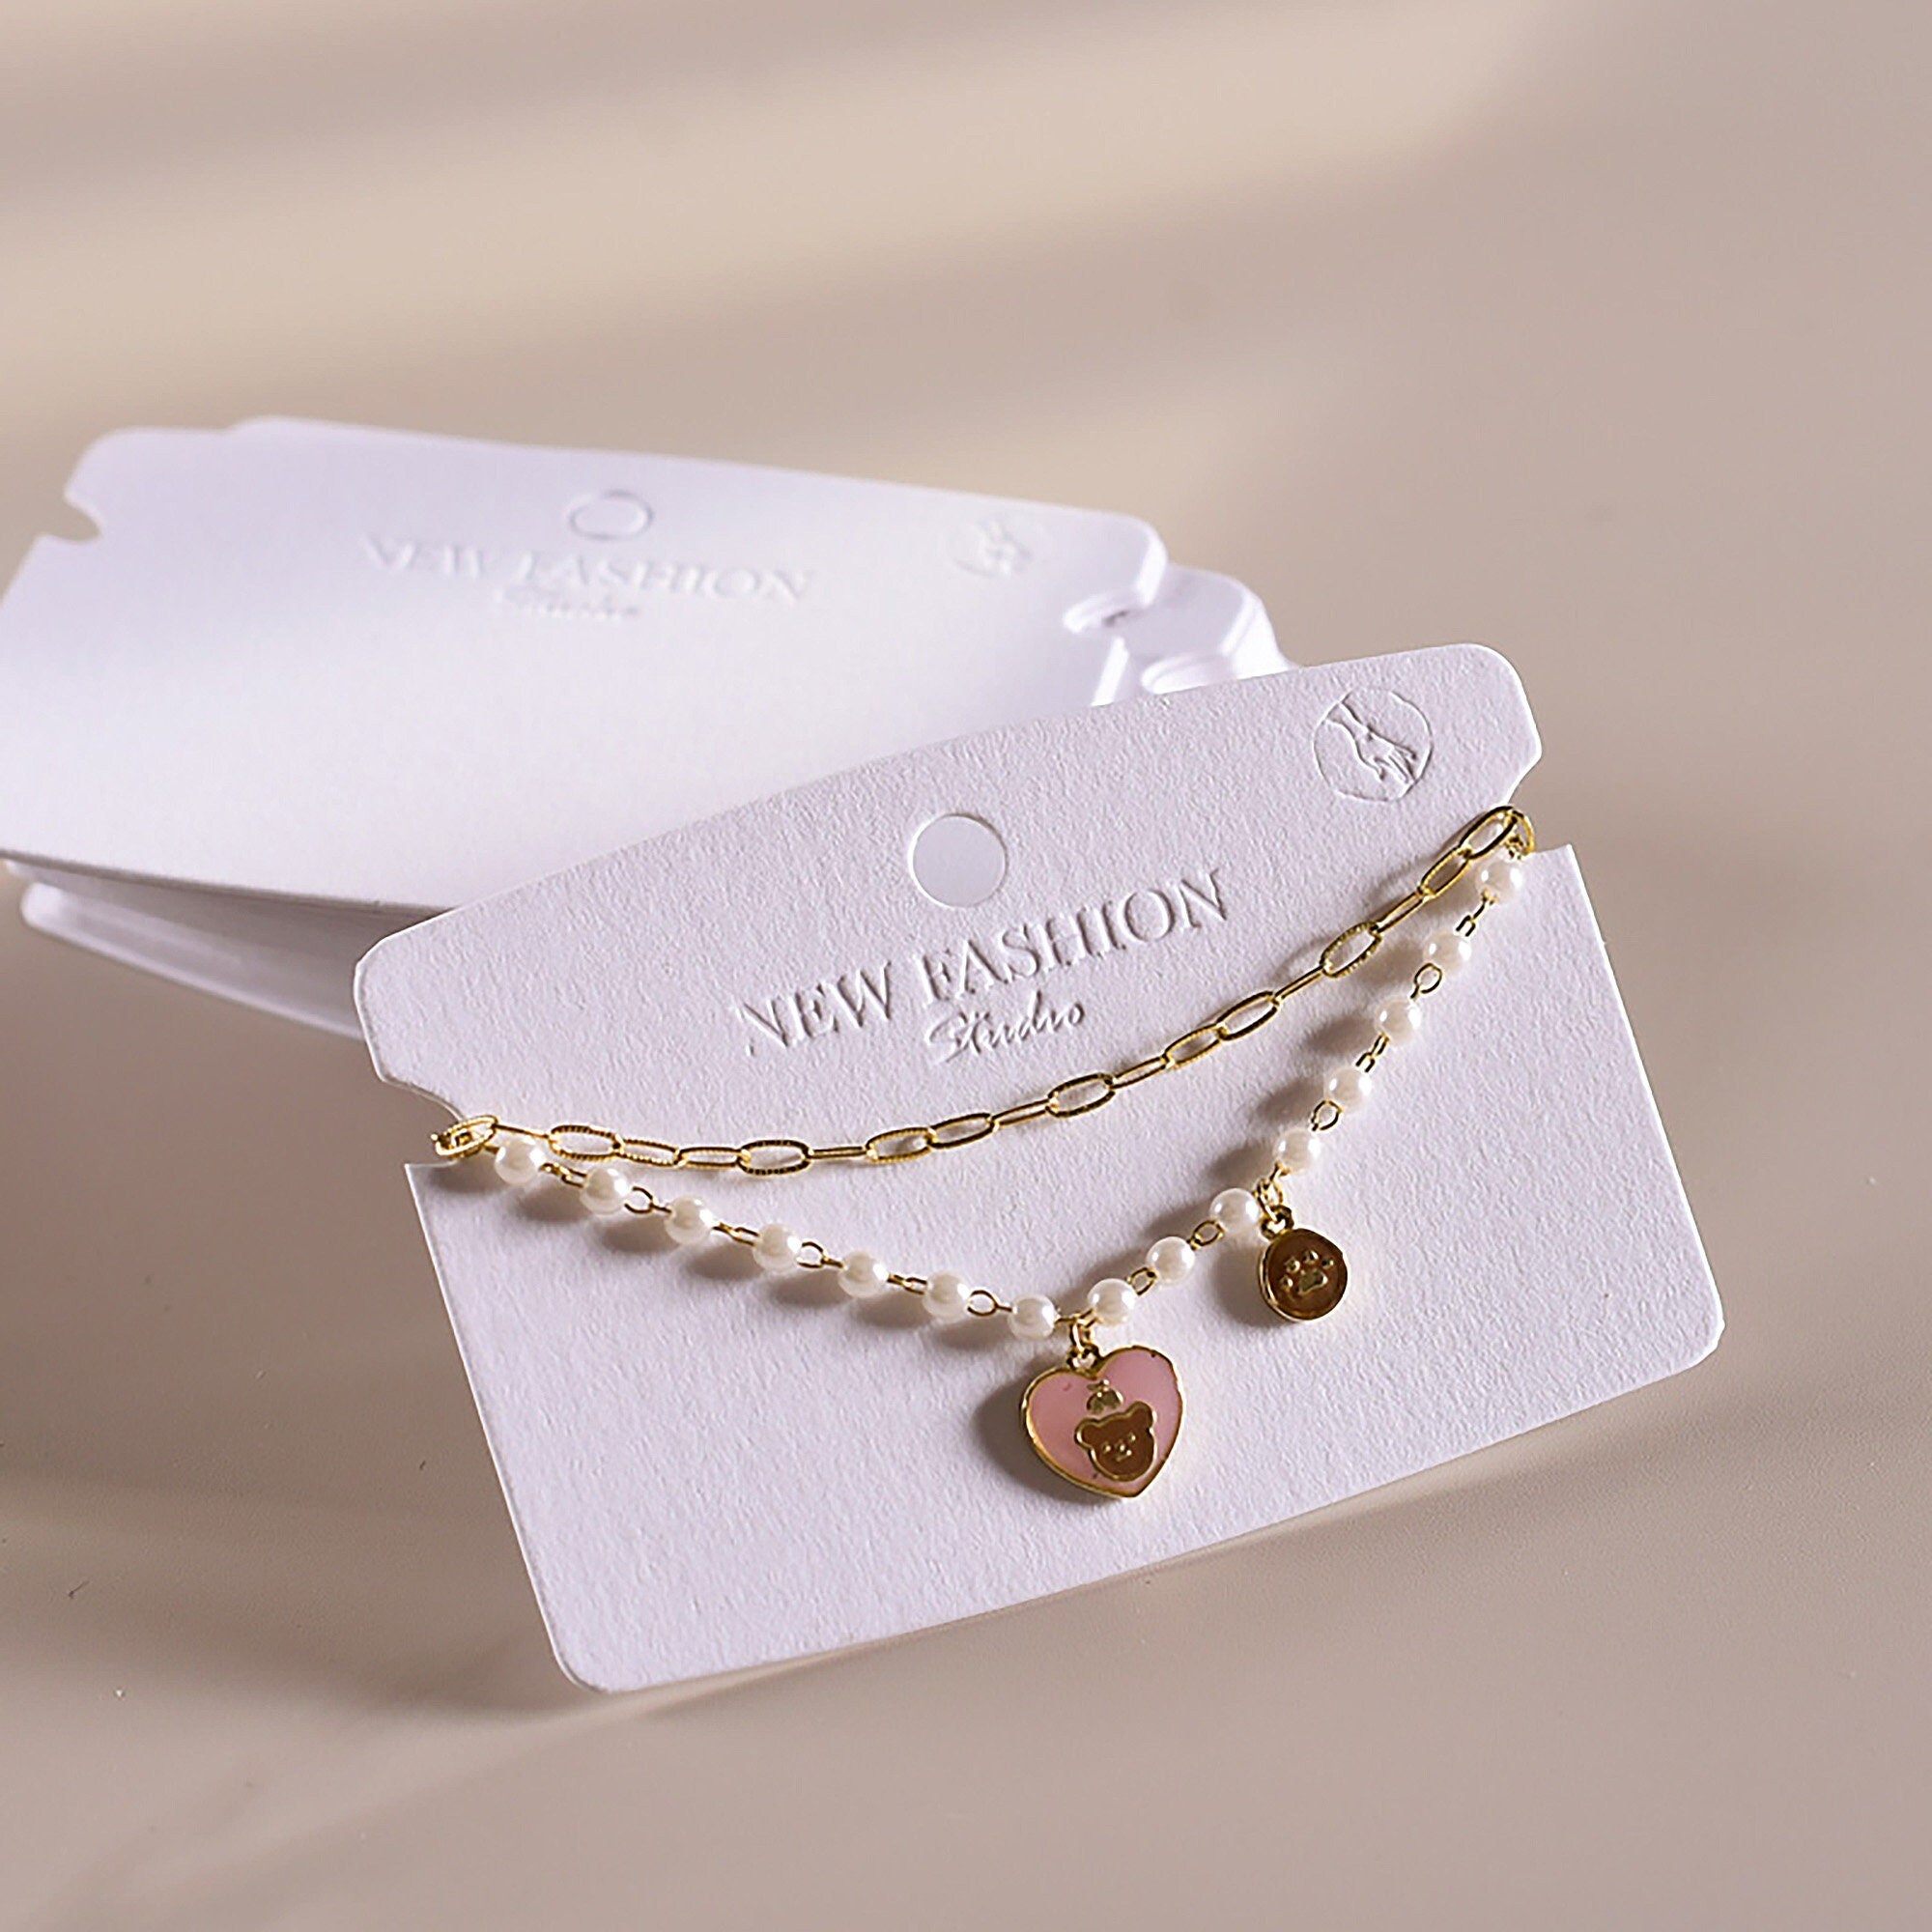 50pcs Earring Holder Cards Paper Tags For Necklace Bracelet